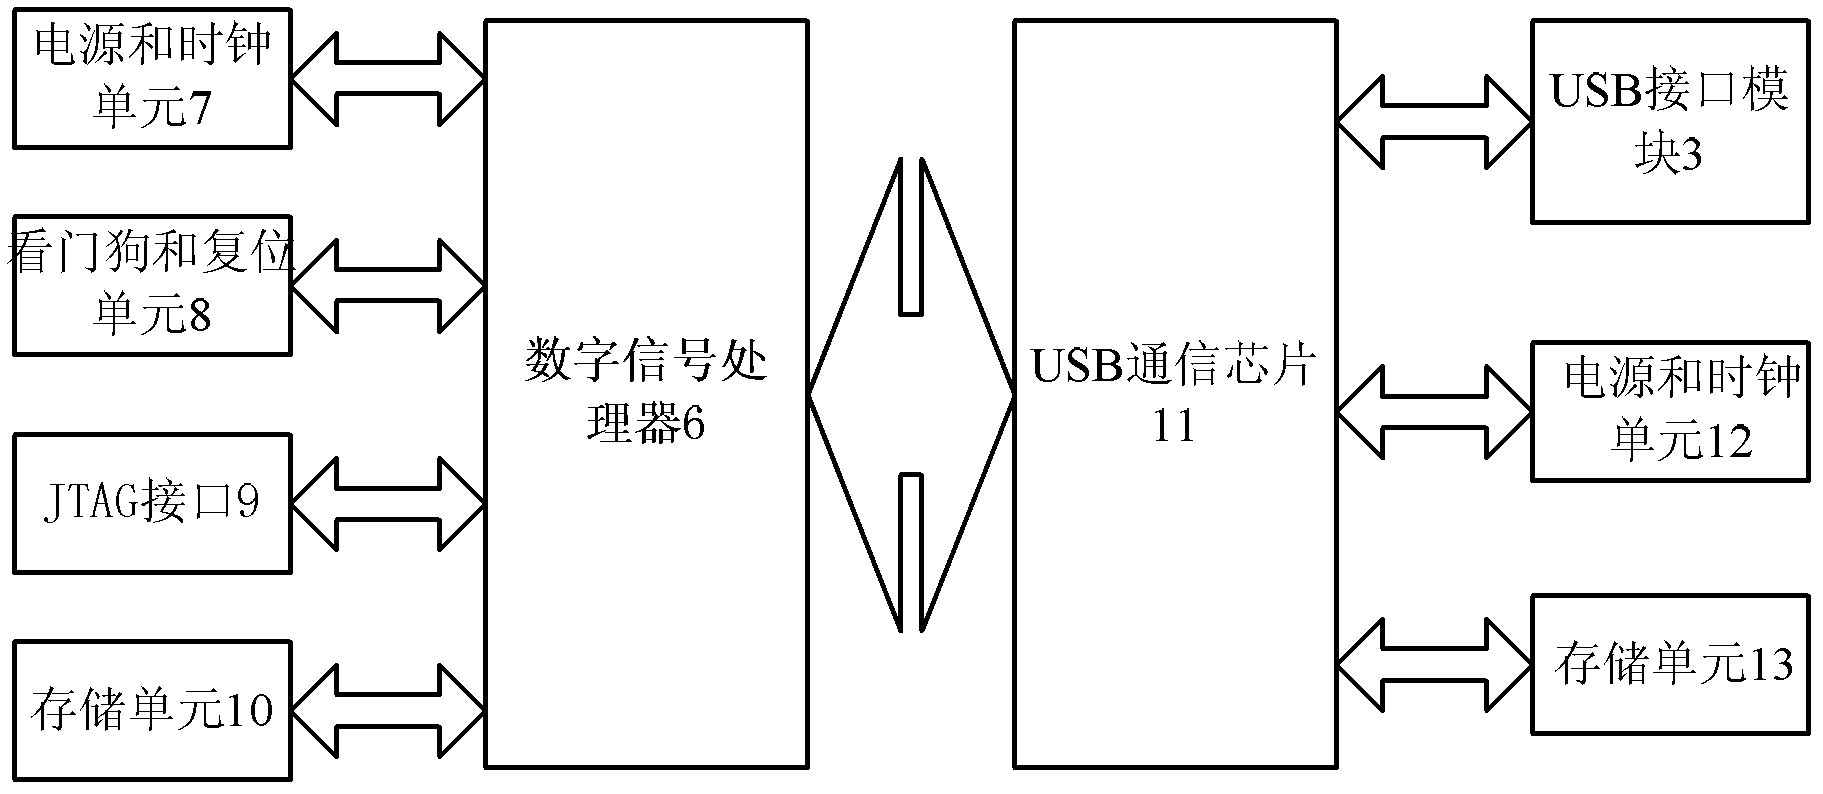 USB (Universal Serial Bus)-based communication module and communication method for alternating current servo driver